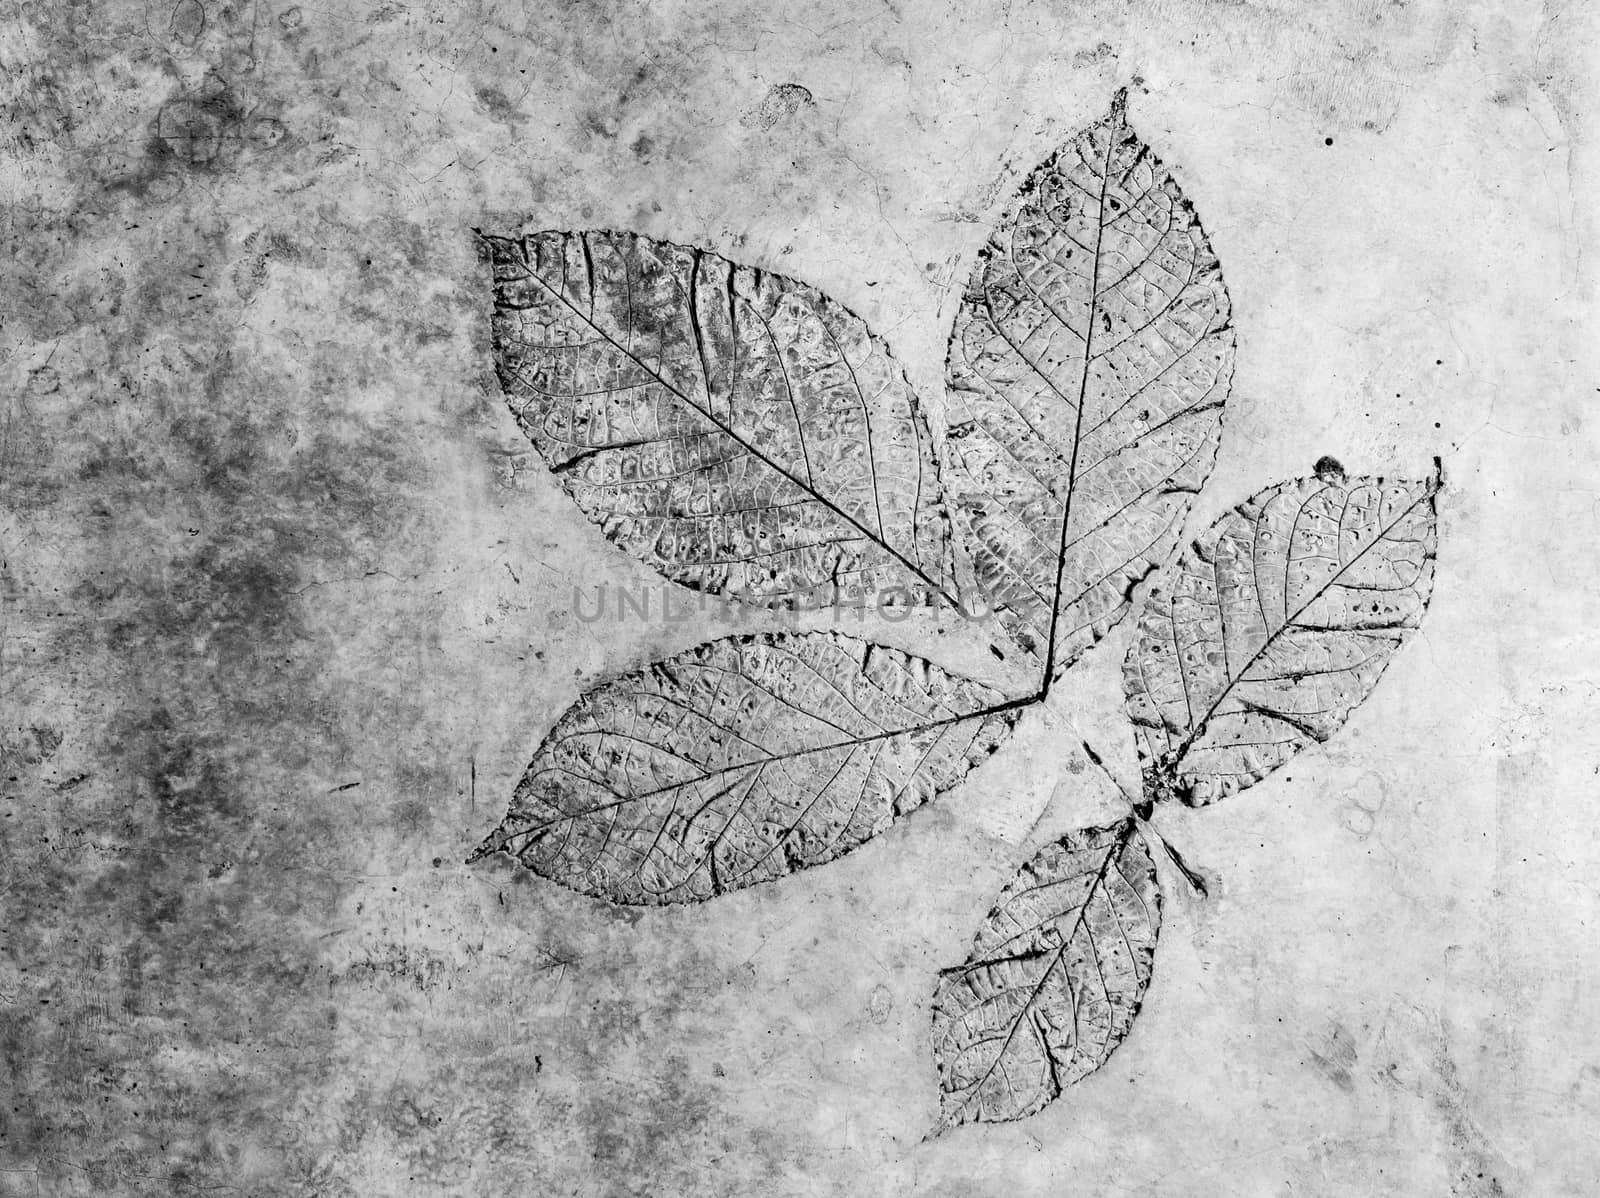 Leaf texture in concrete floor by Satakorn